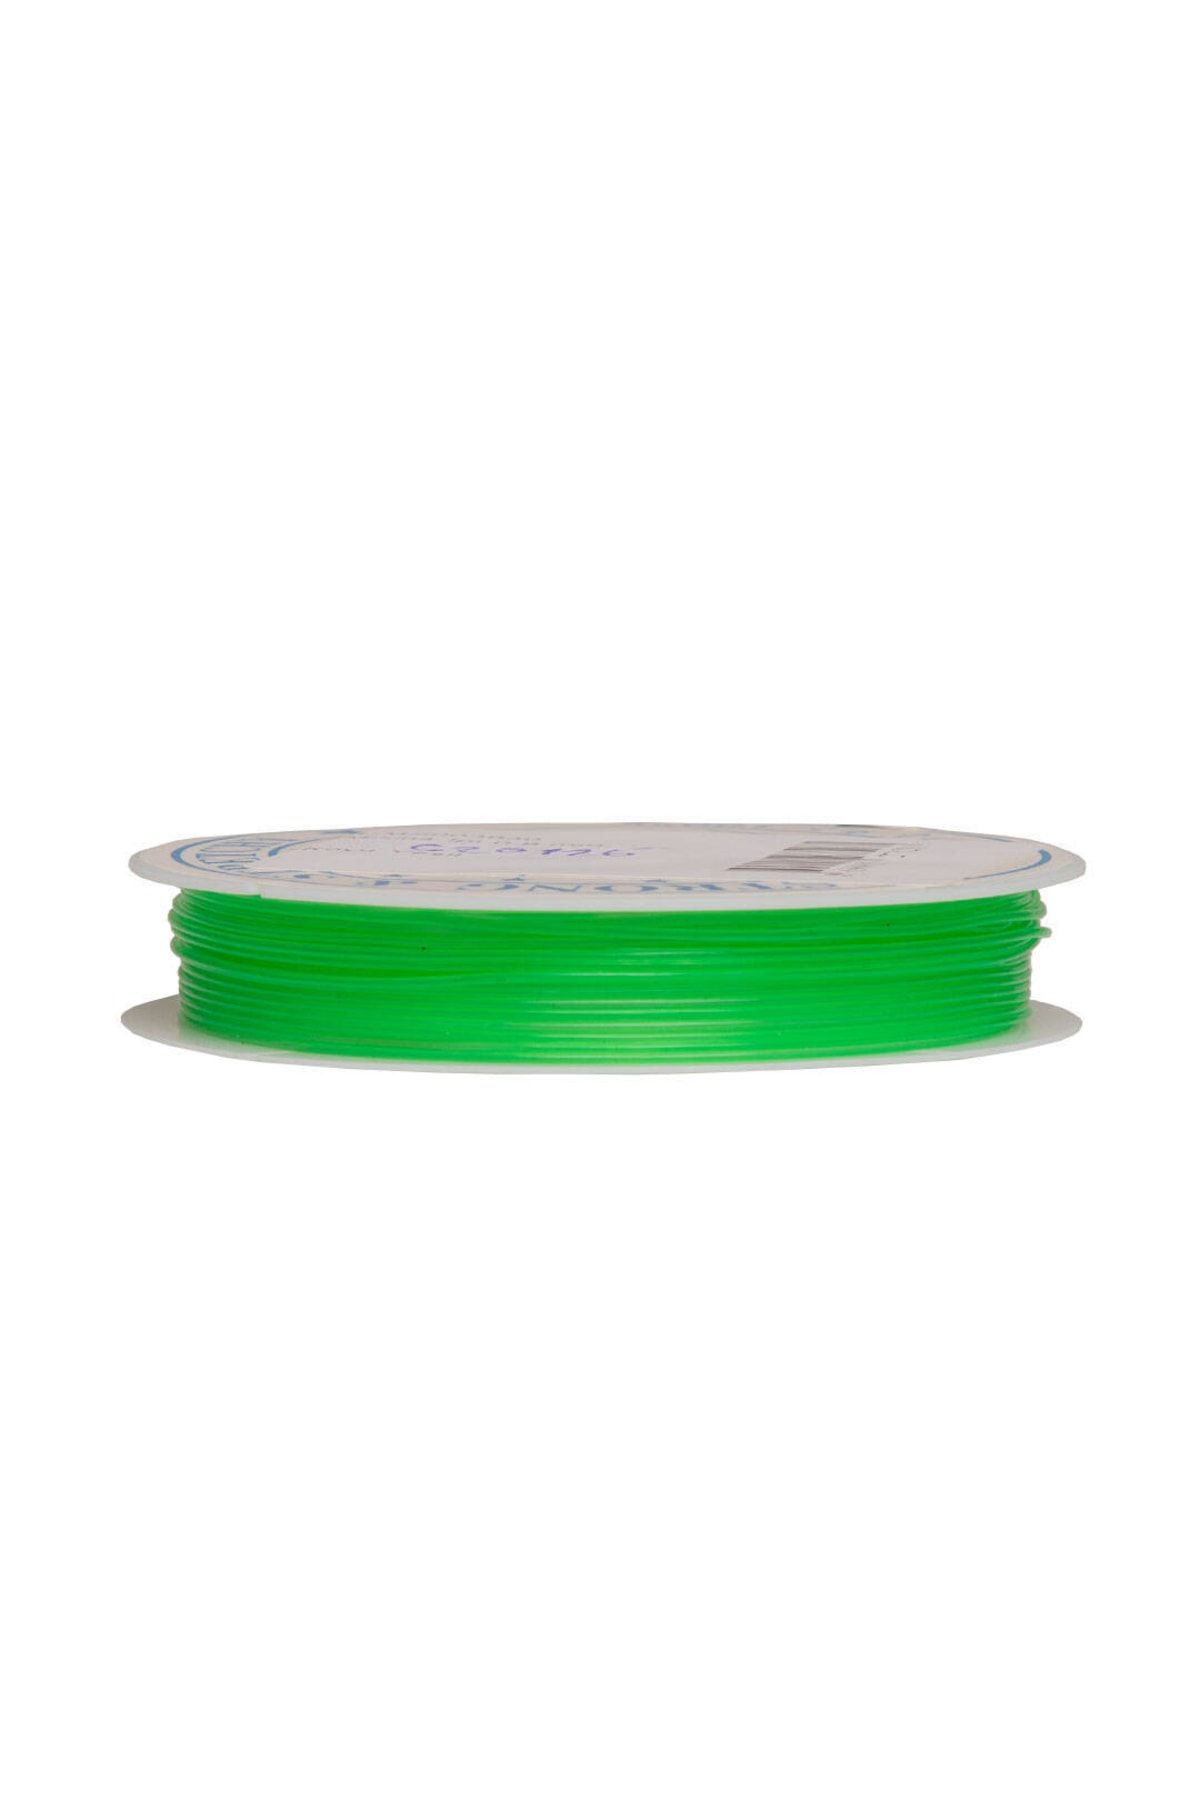 Simisso Misina Ipi 0.8 Mm | Koyu Yeşil